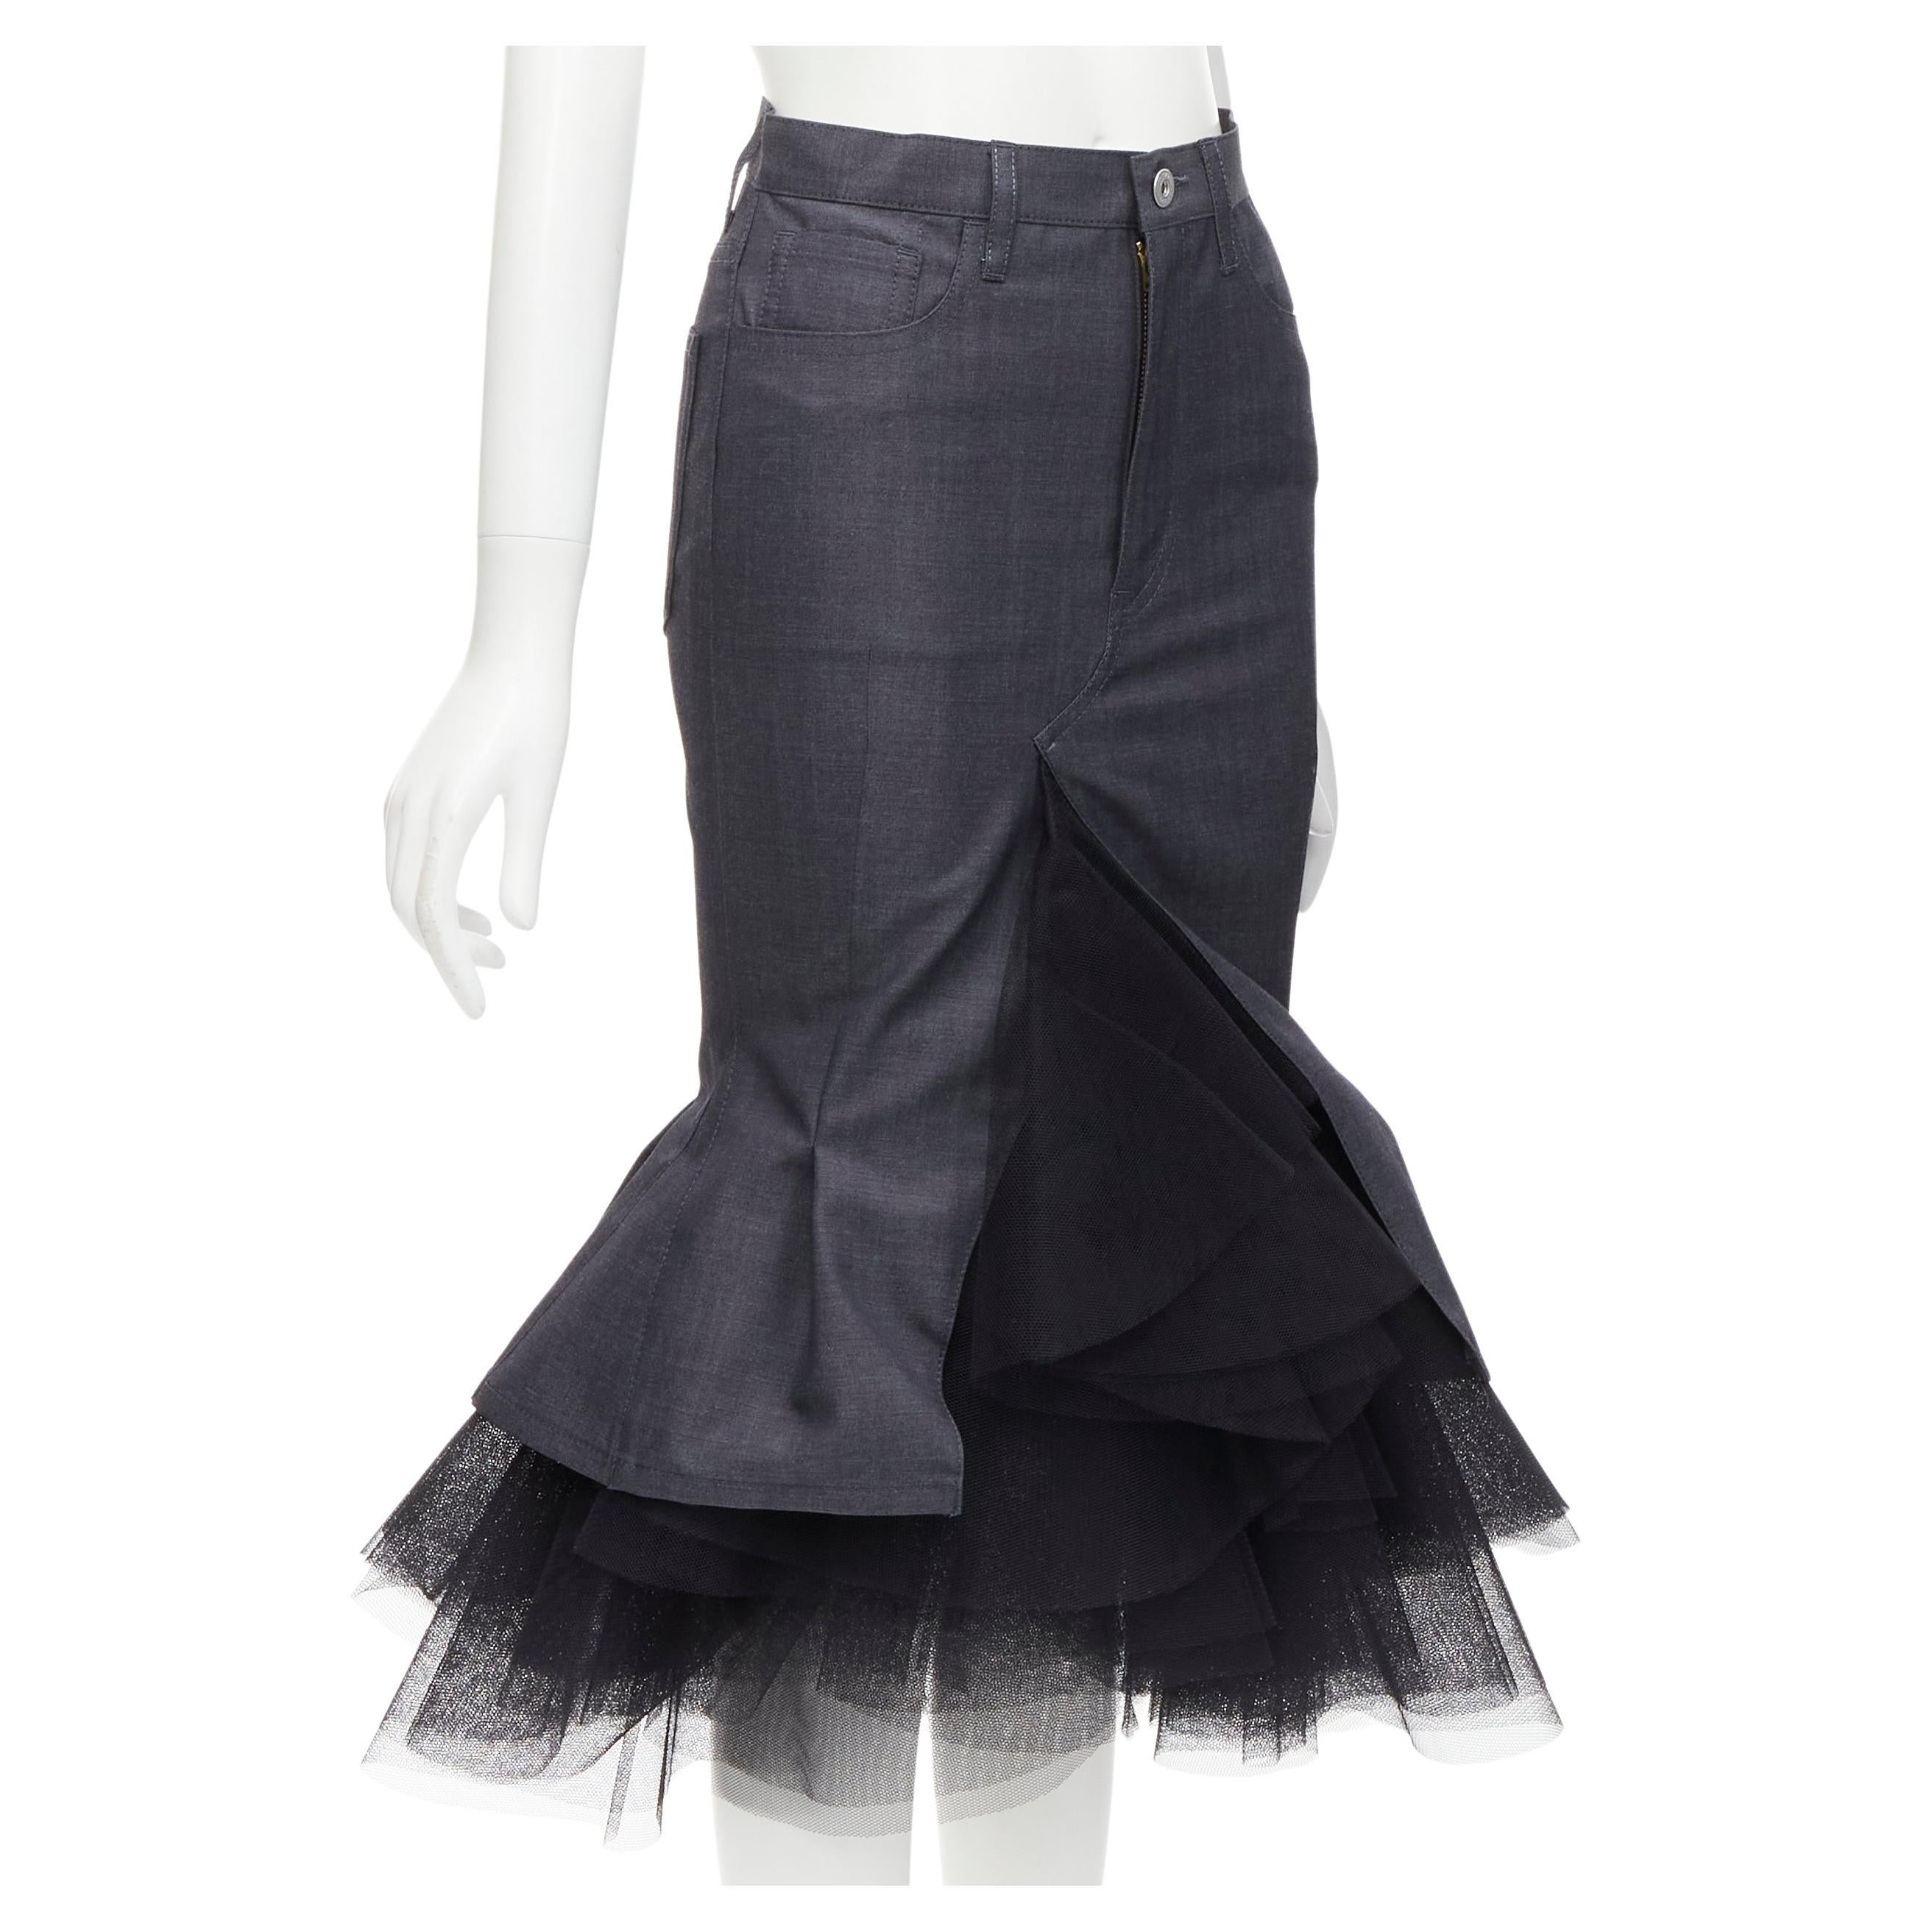 JUNYA WATANABE 2018 grey wool black tulle insert fitted mermaid midi skirt XS